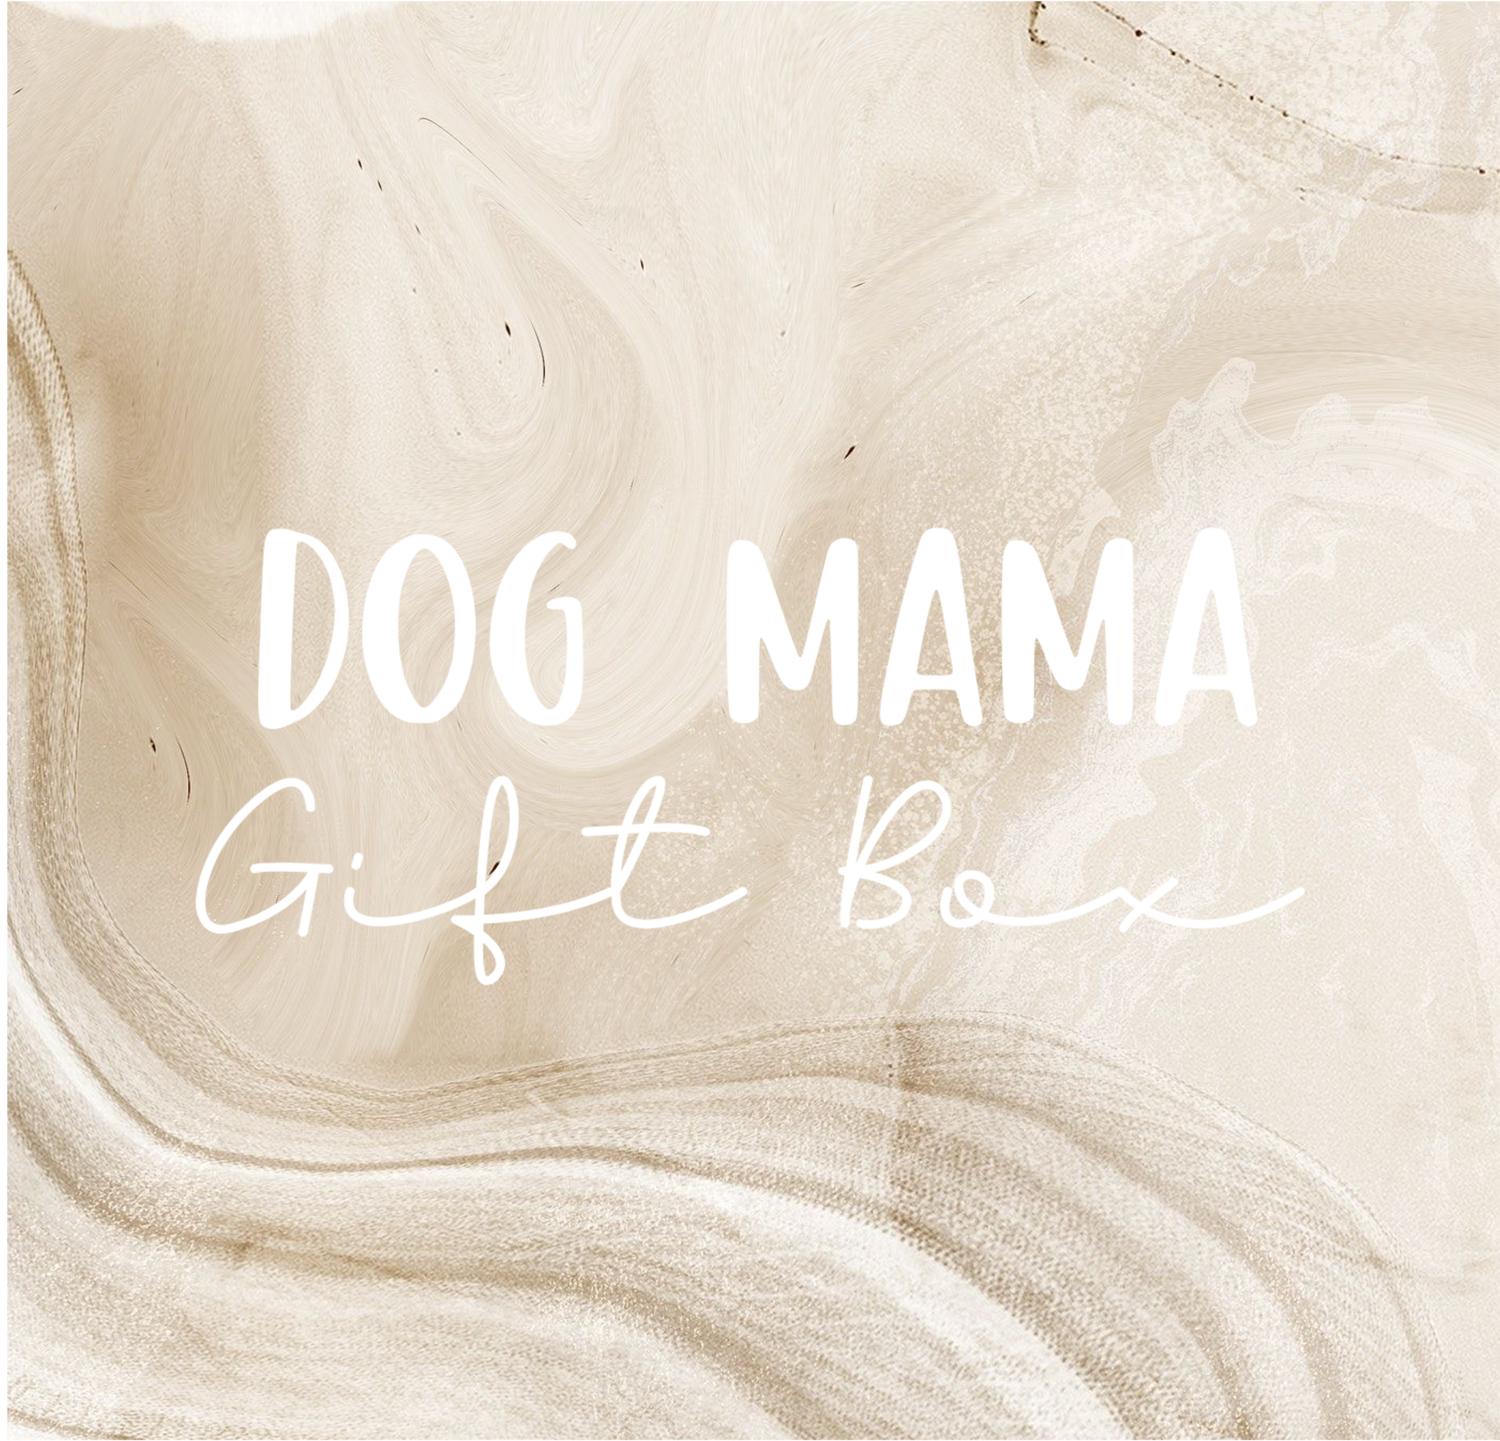 DOG MAMA GIFT BOX